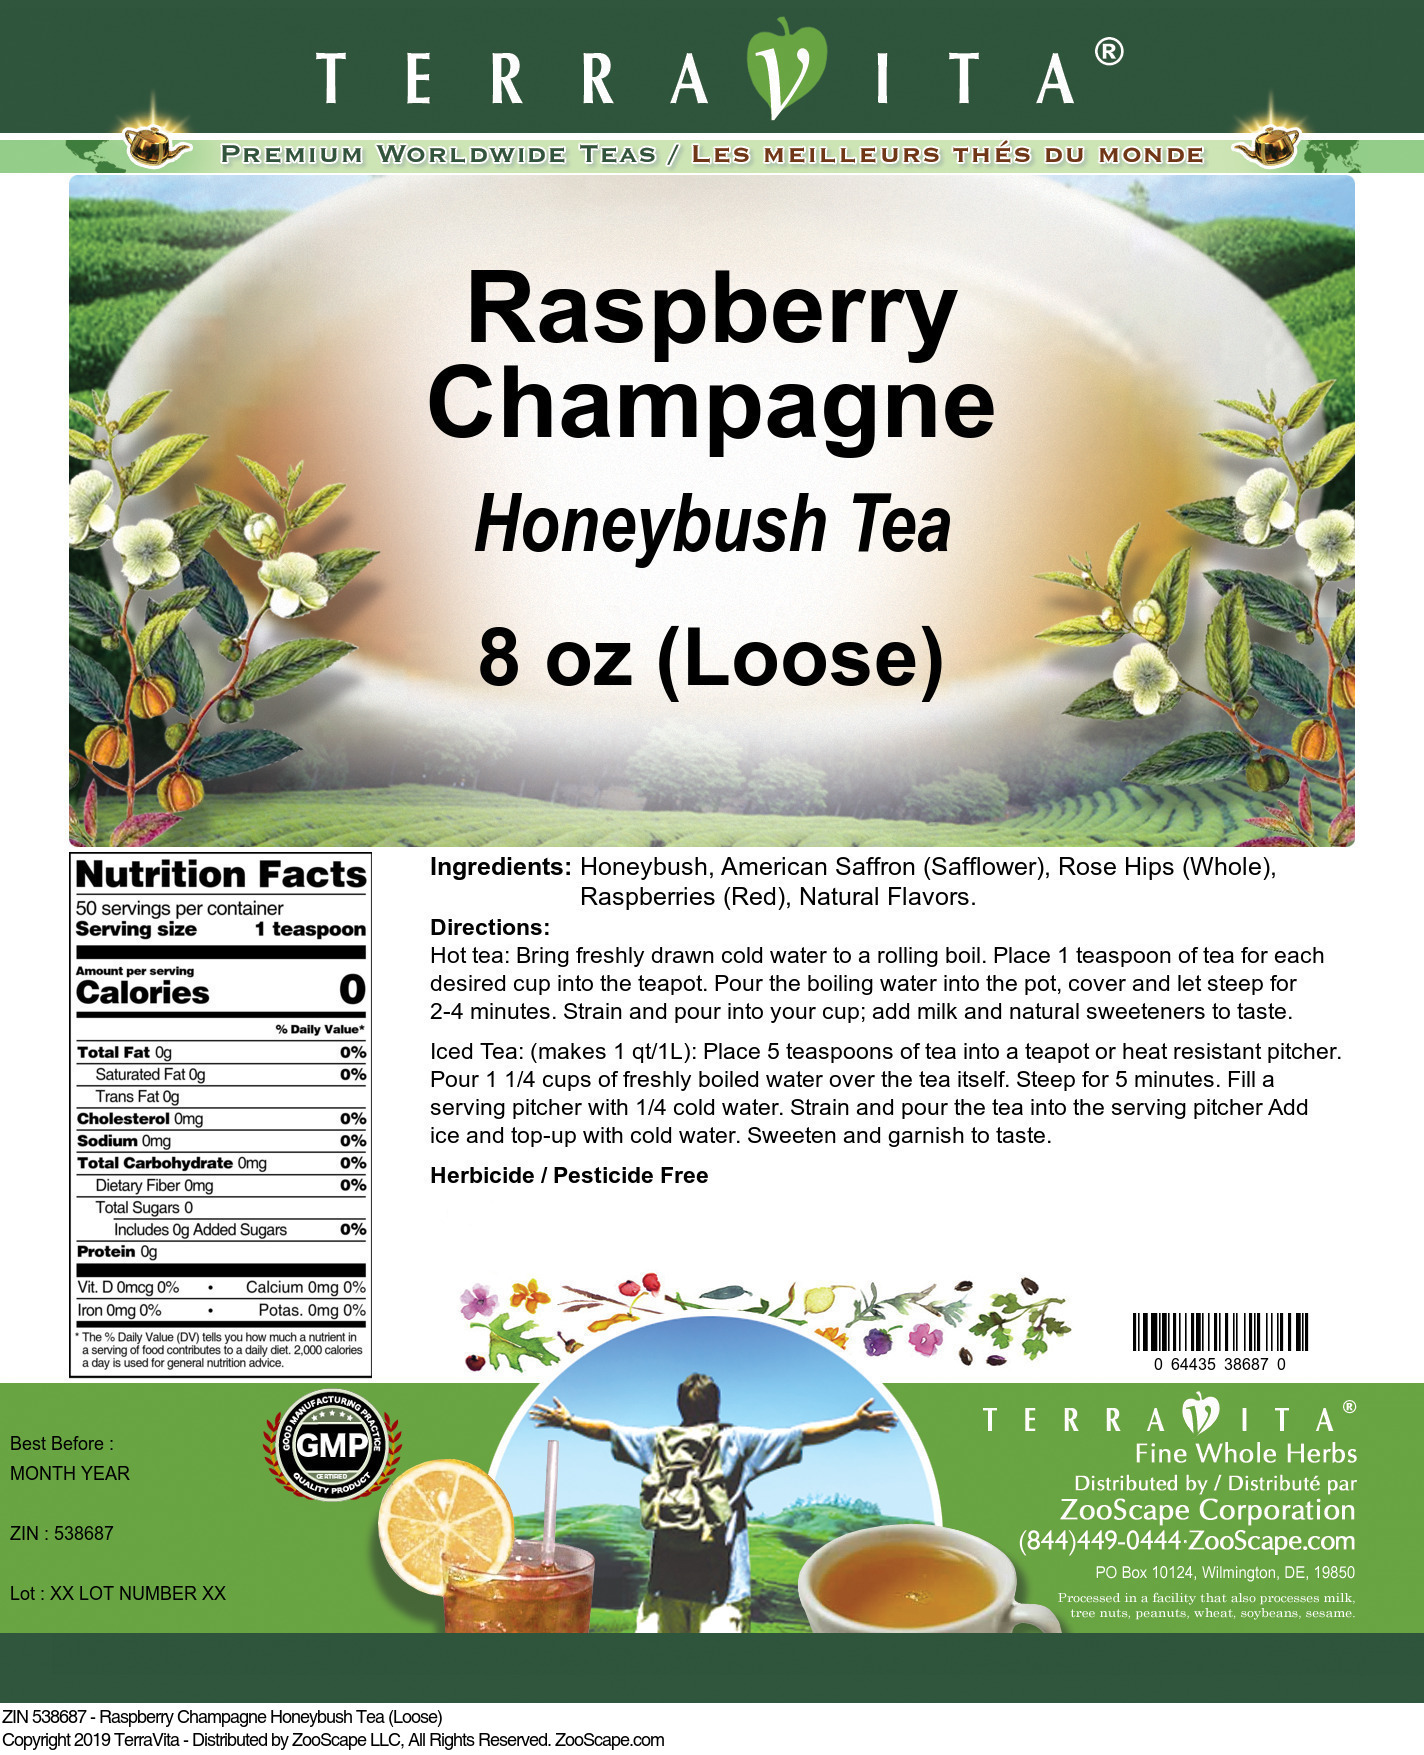 Raspberry Champagne Honeybush Tea (Loose) - Label